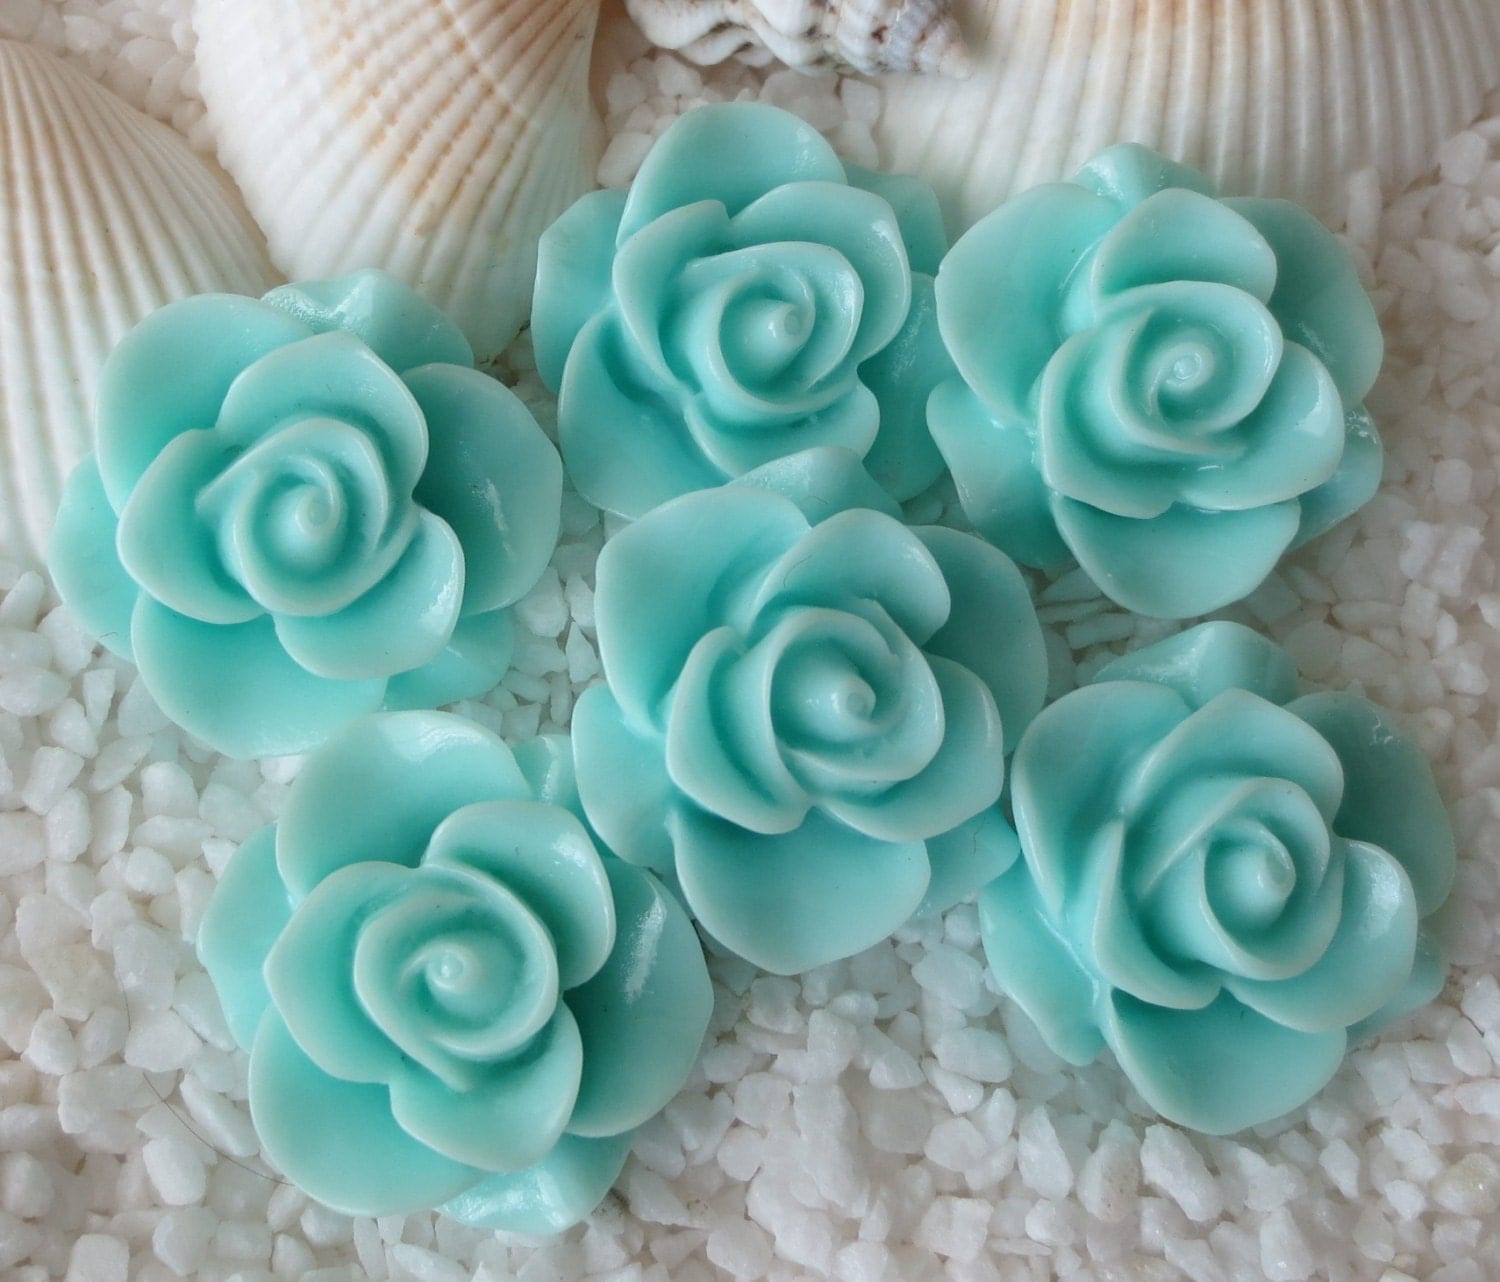 Resin Rose Flower Cabochon 21mm 12 pcs Light Turquoise